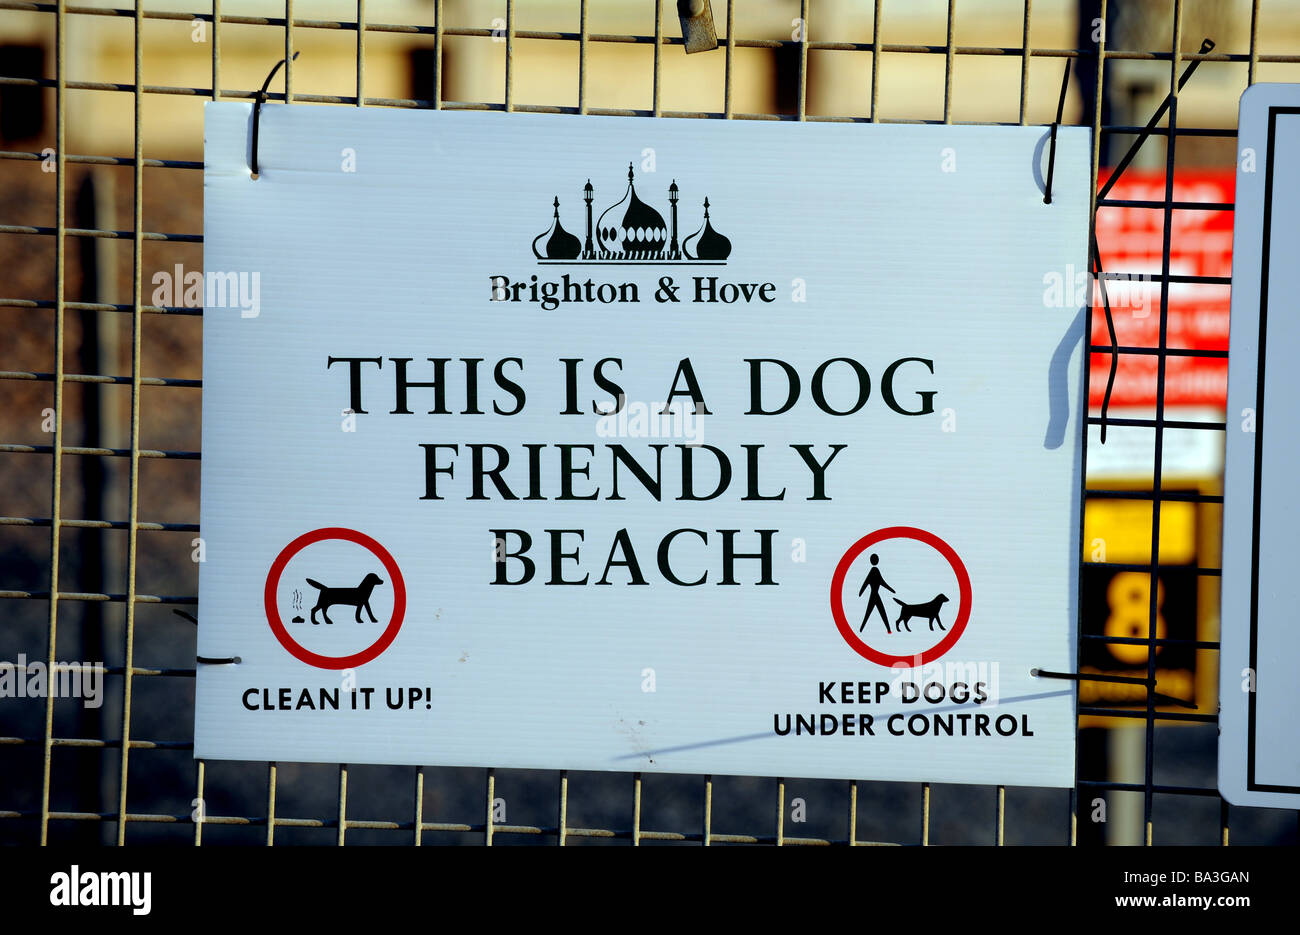 Dog friendly beach sign in brighton Stock Photo